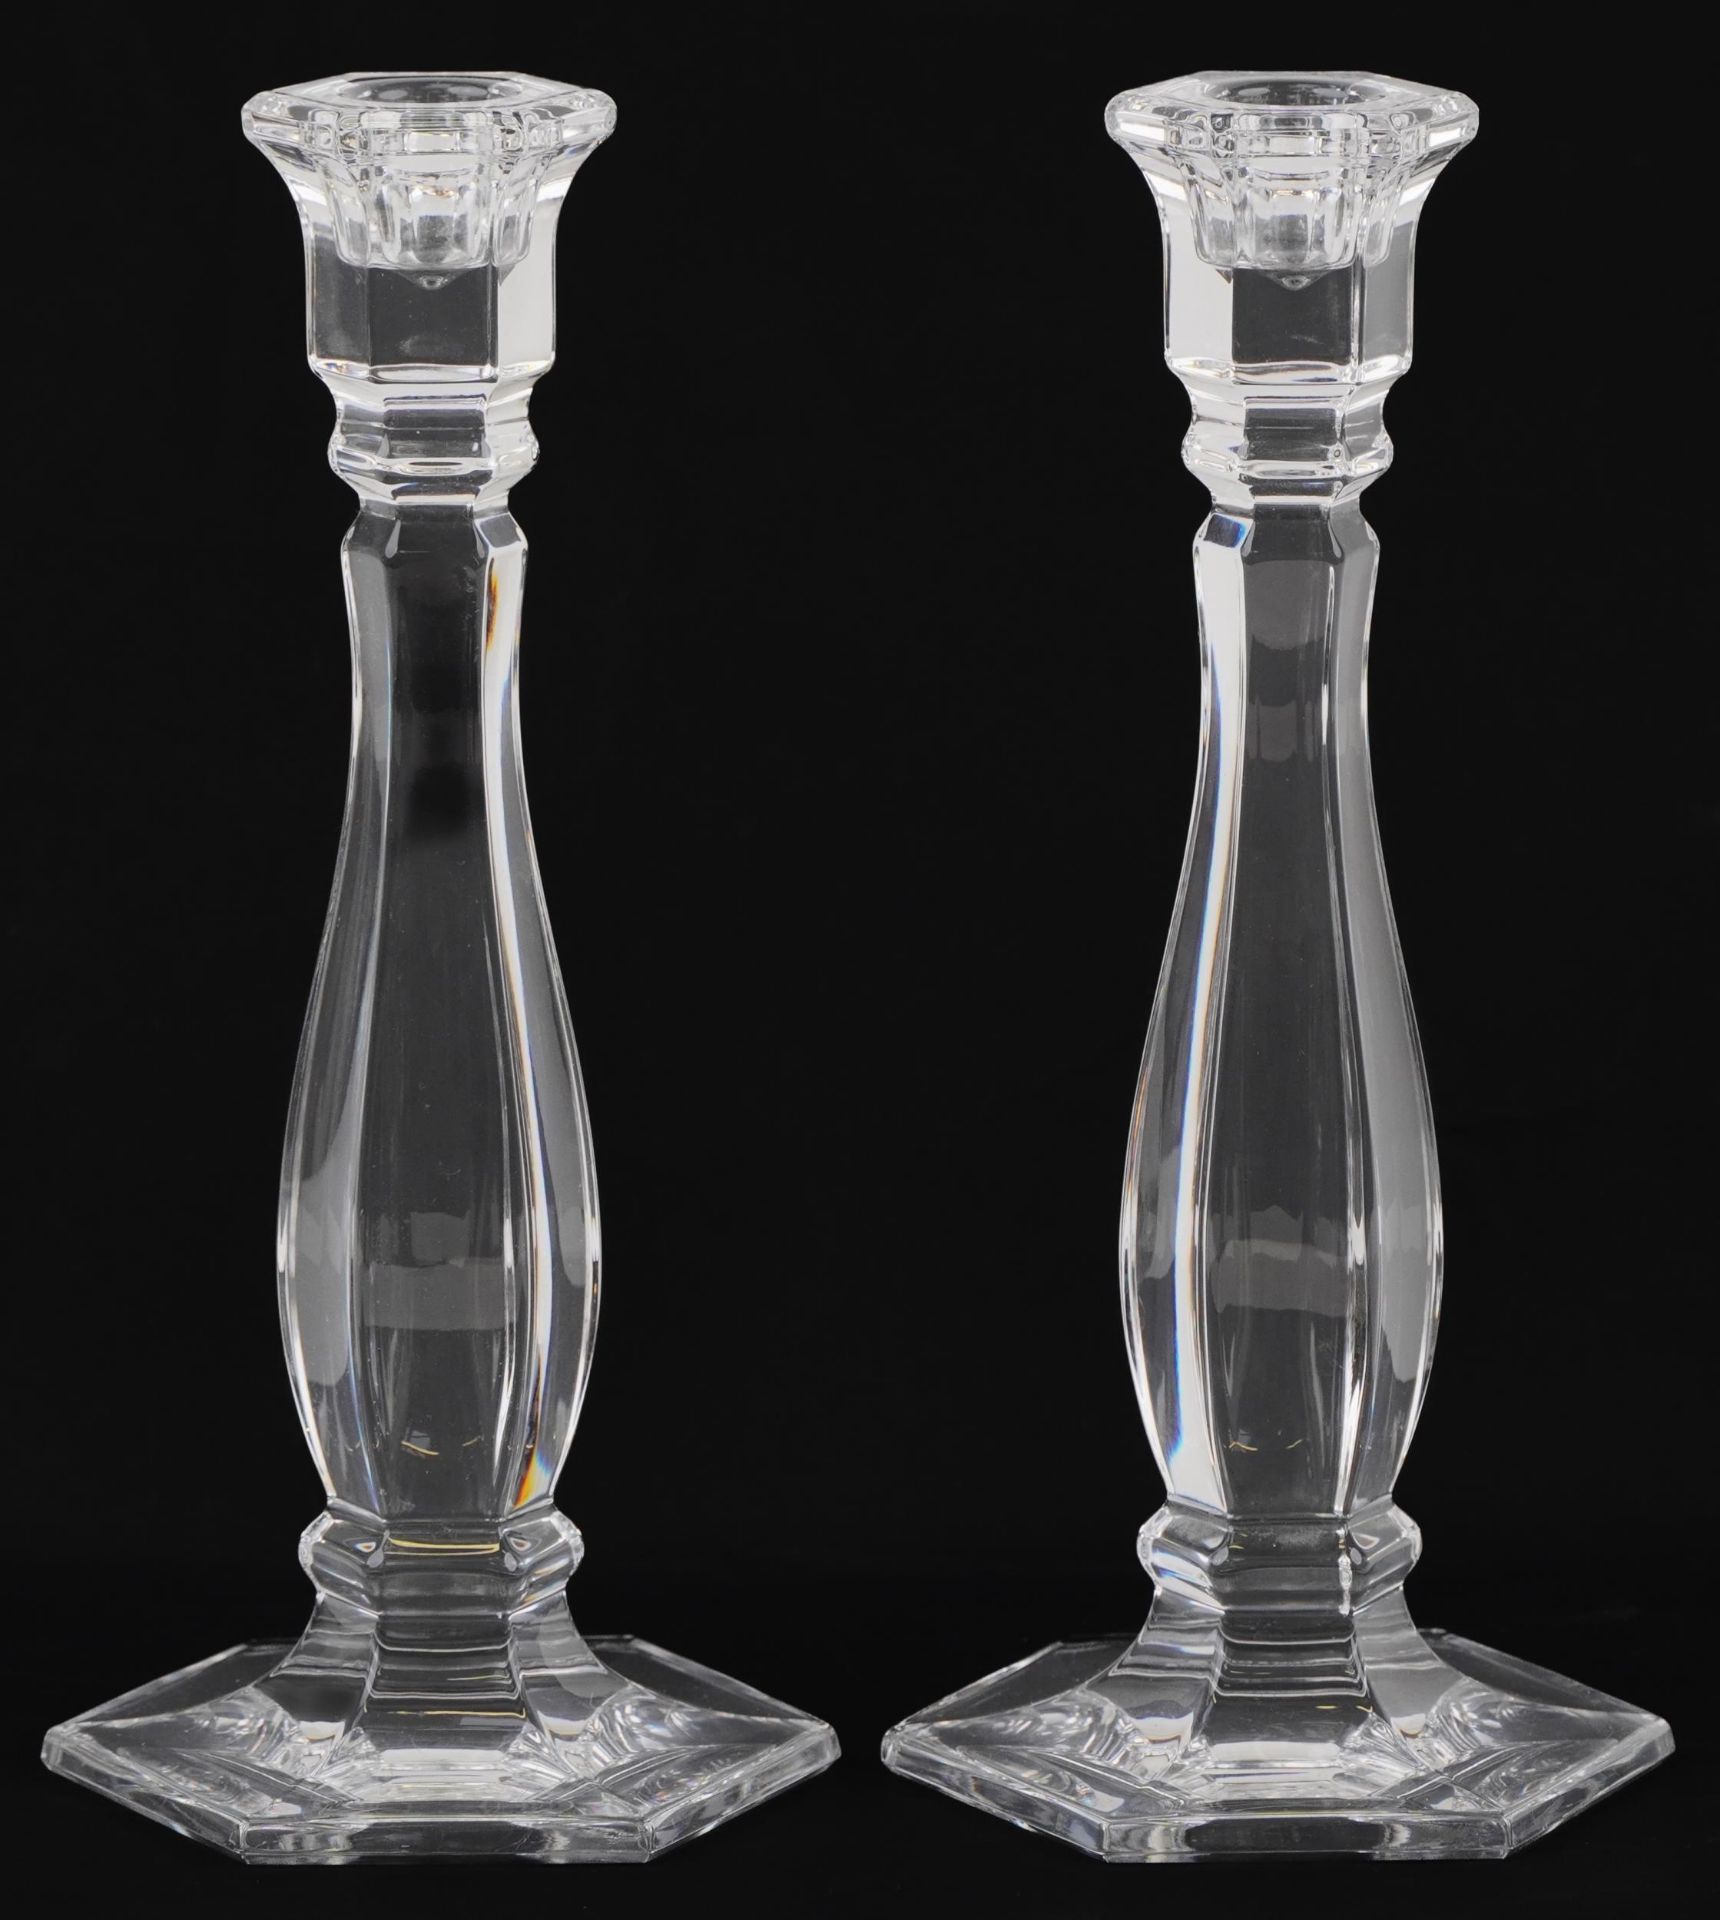 Pair of Tiffany & Co hexagonal glass candlesticks, each 24cm high